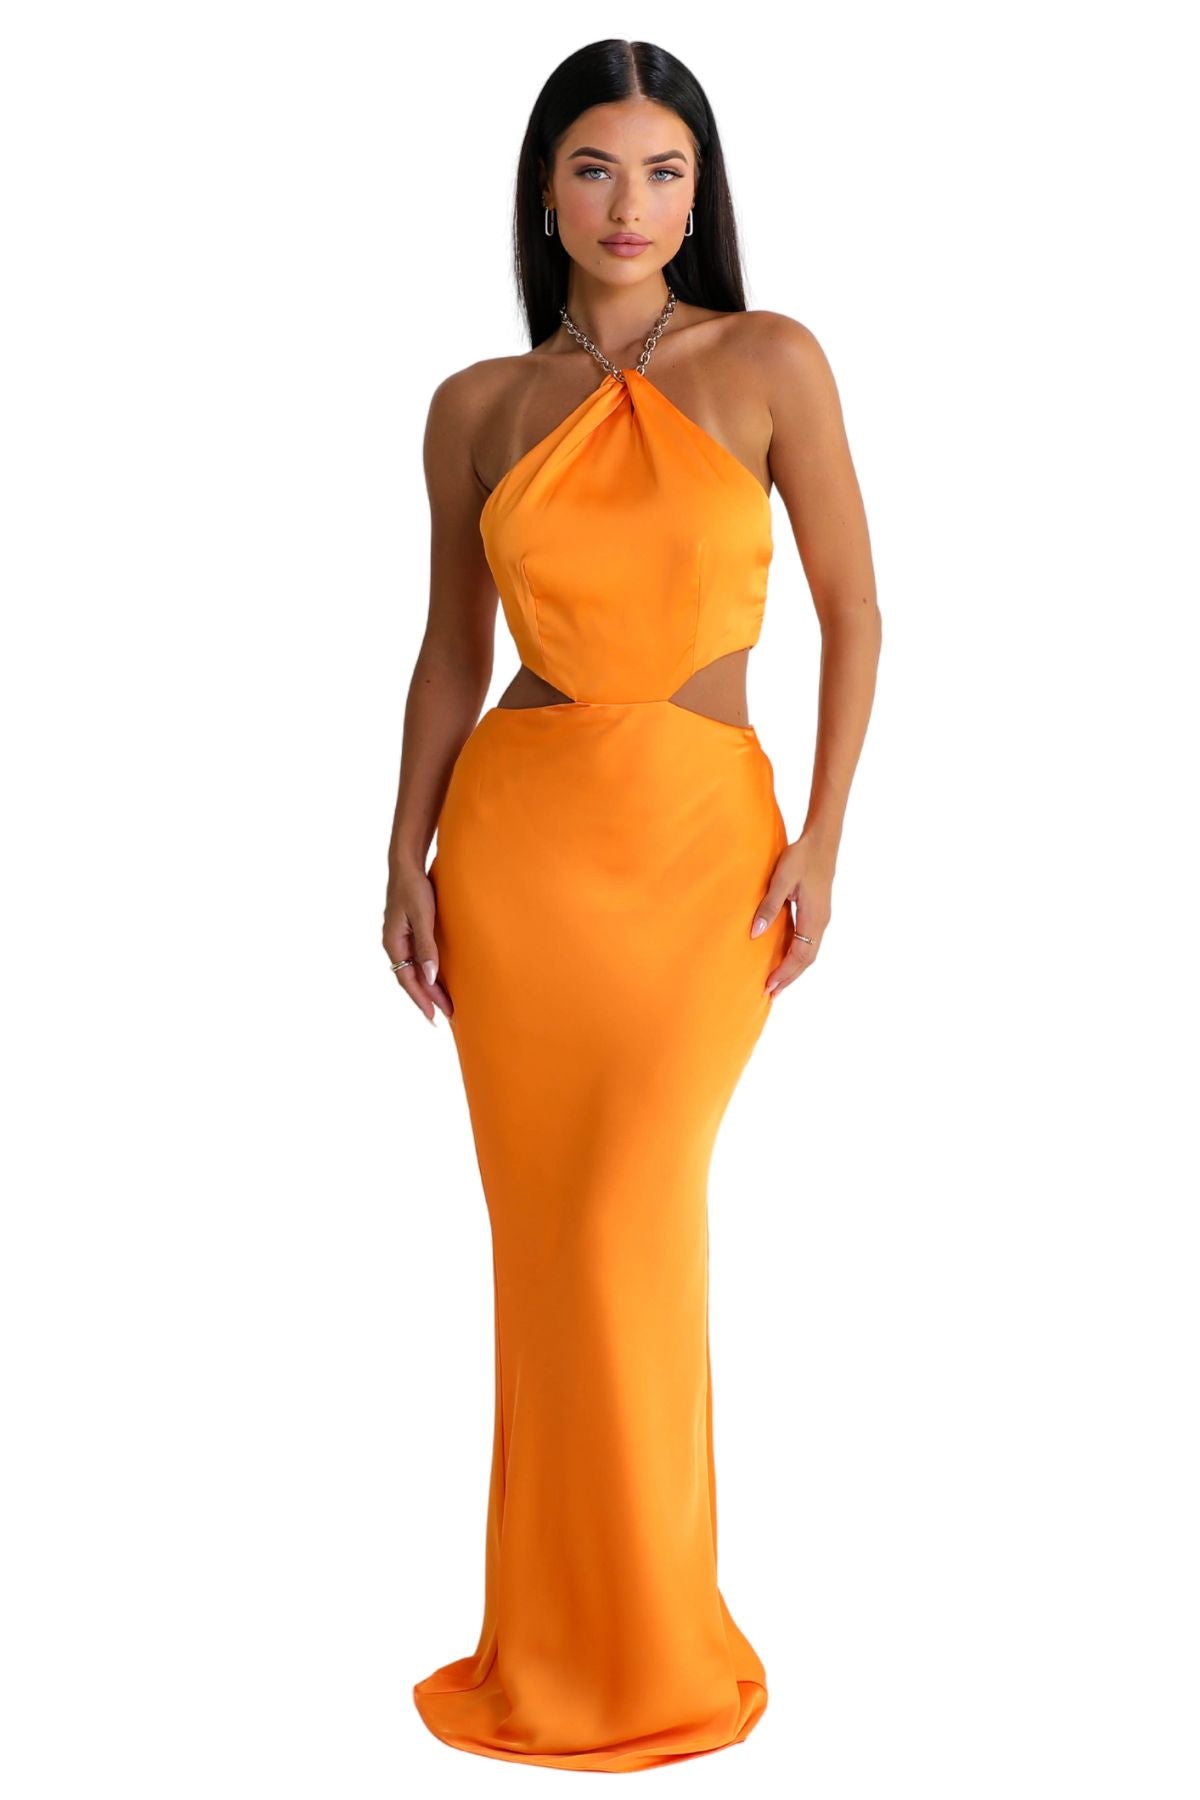 Lexi LEXI Morena Dress (Mango Orange) - RRP $379 - 1_c07464ff-809c-4c75-b921-d3fdad03370a.jpg